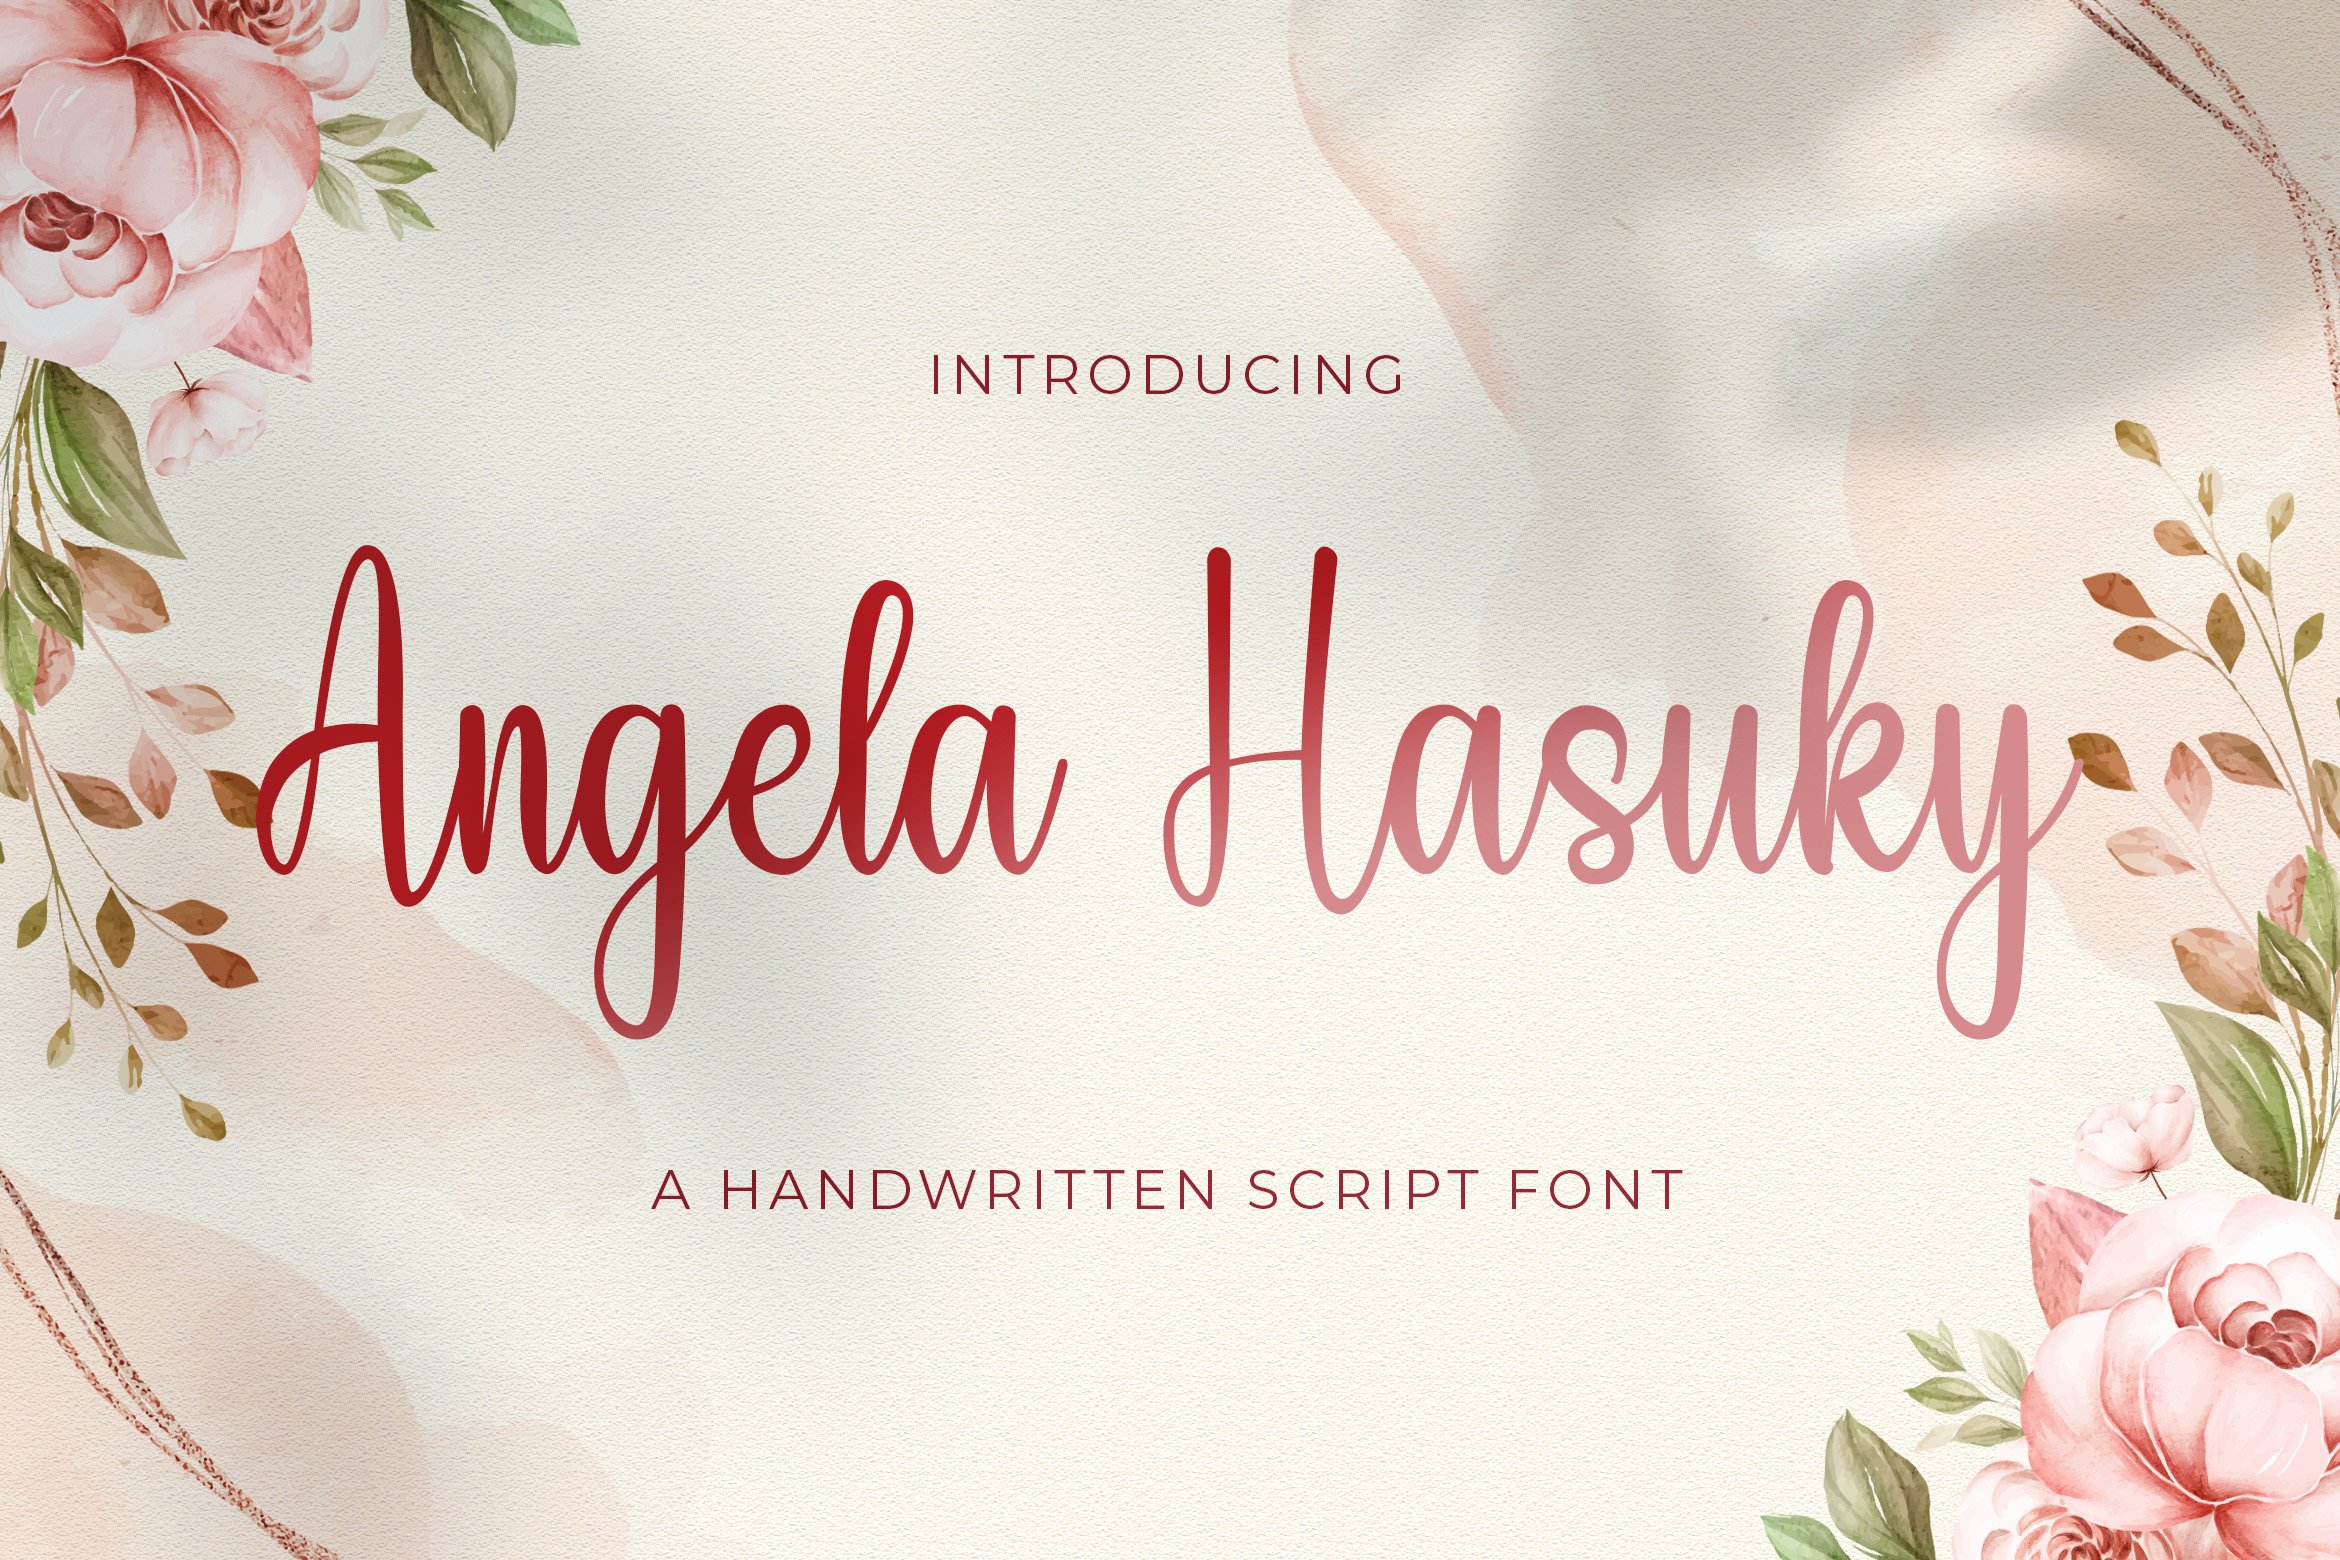 Angela Hasuky - Handwritten Font cover image.